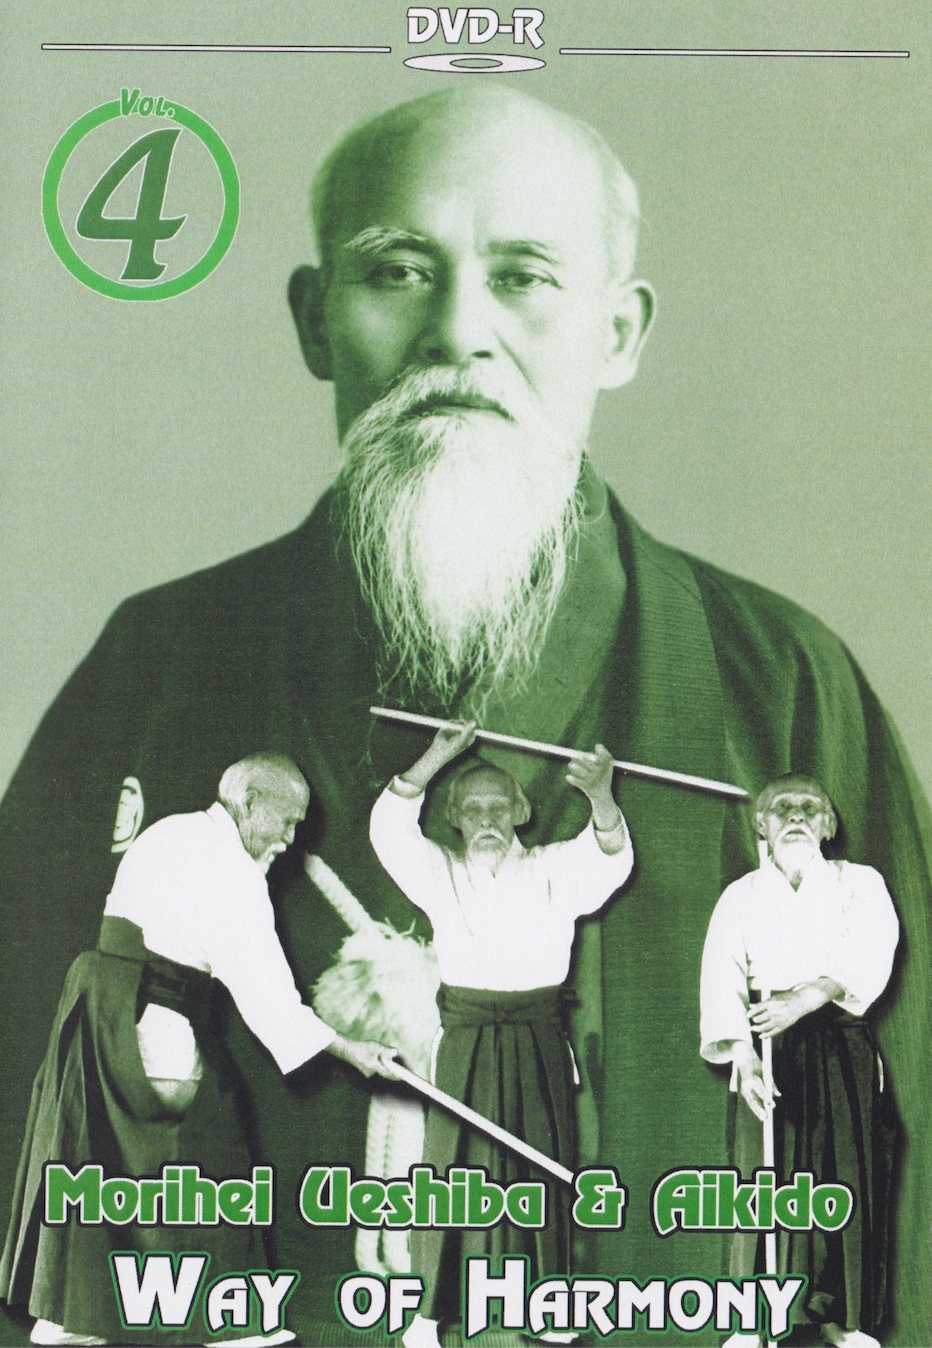 Morihei Ueshiba & Aikido 4: Way of Harmony DVD (Preowned) - Budovideos